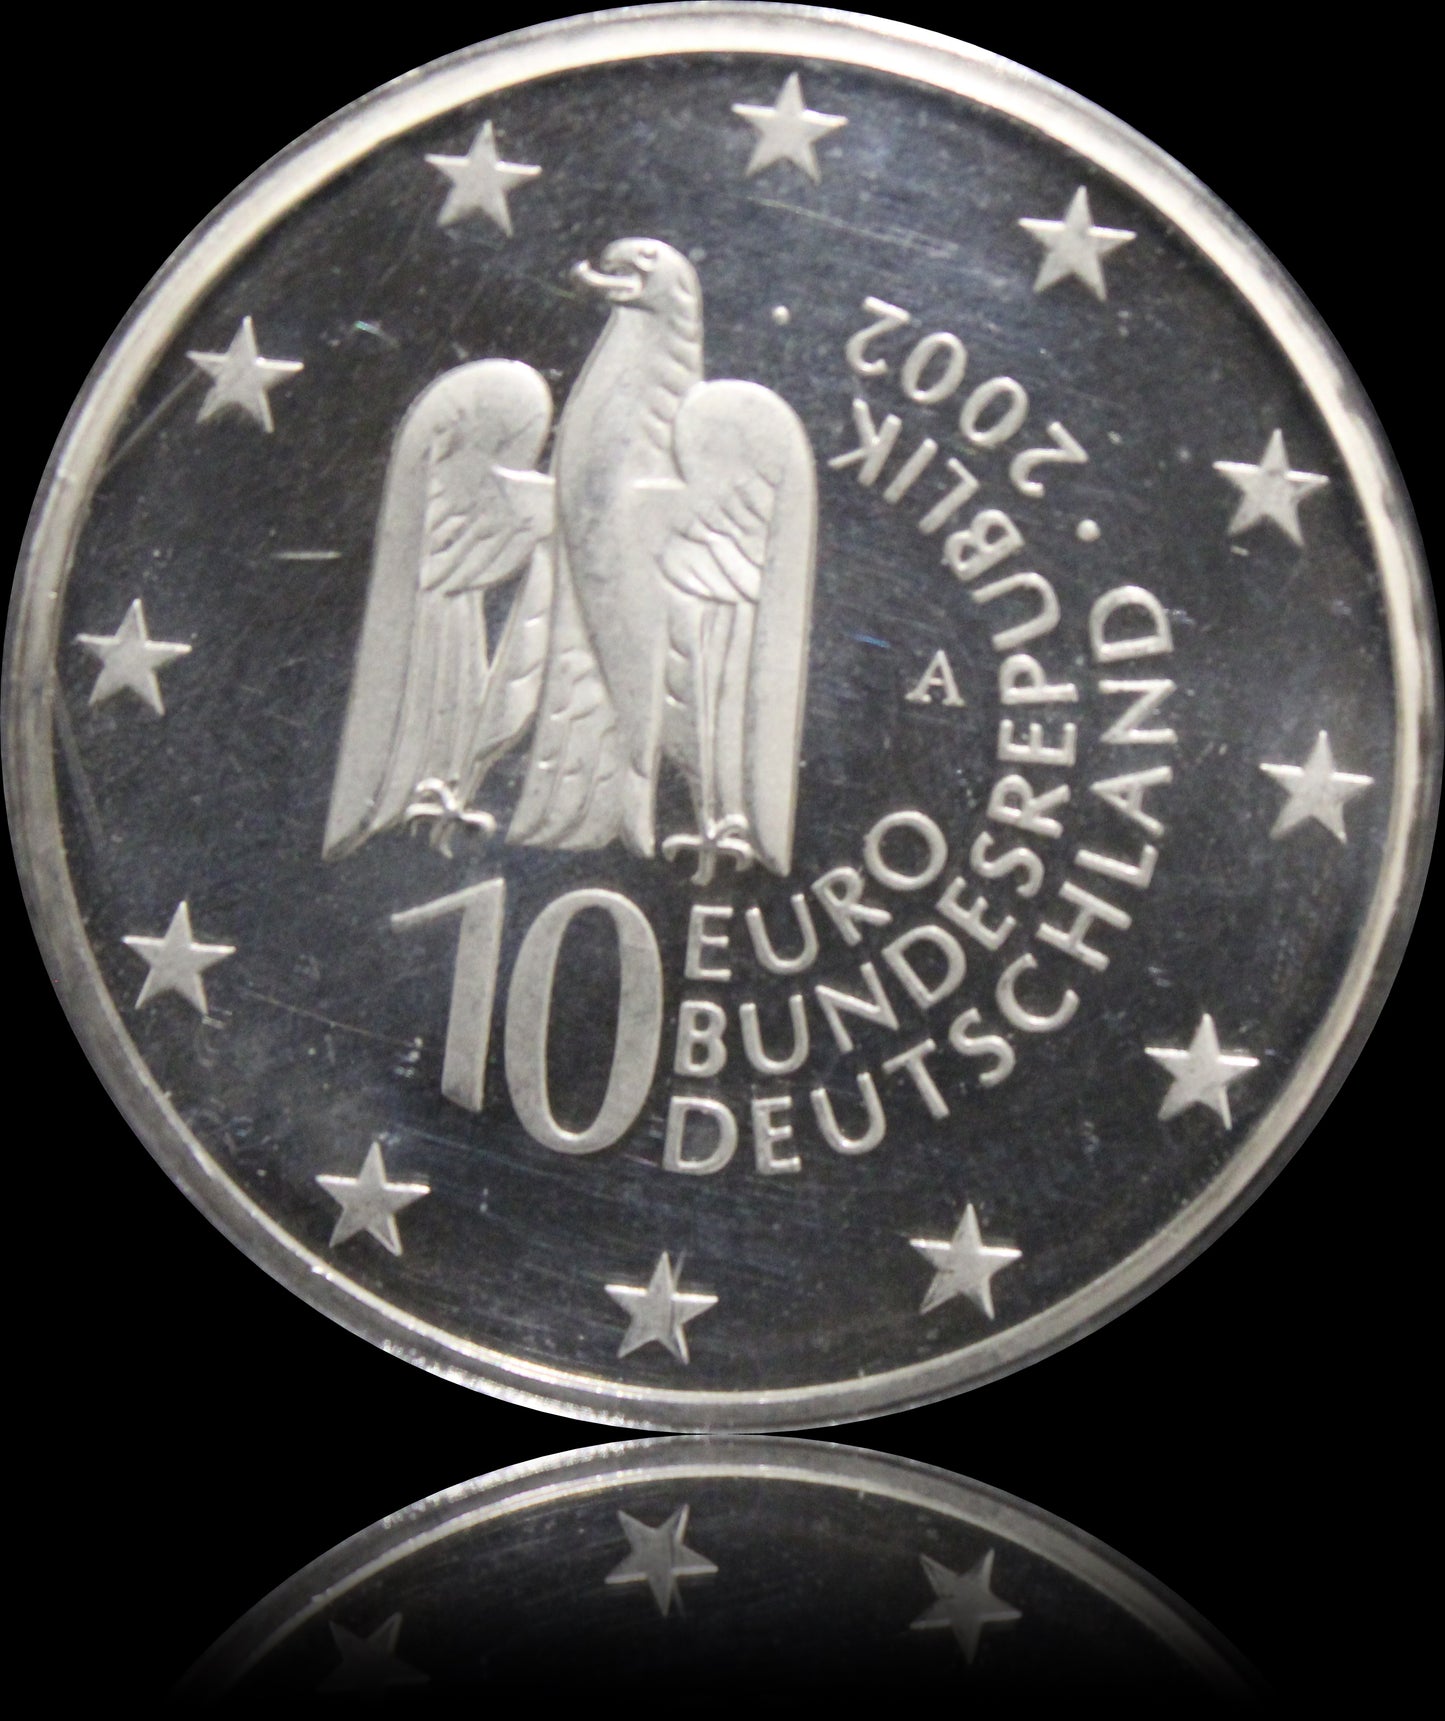 MUSEUMSINSEL BERLIN, Serie 10 € Silber Gedenkmünzen Deutschland, Stempelglanz, 2002